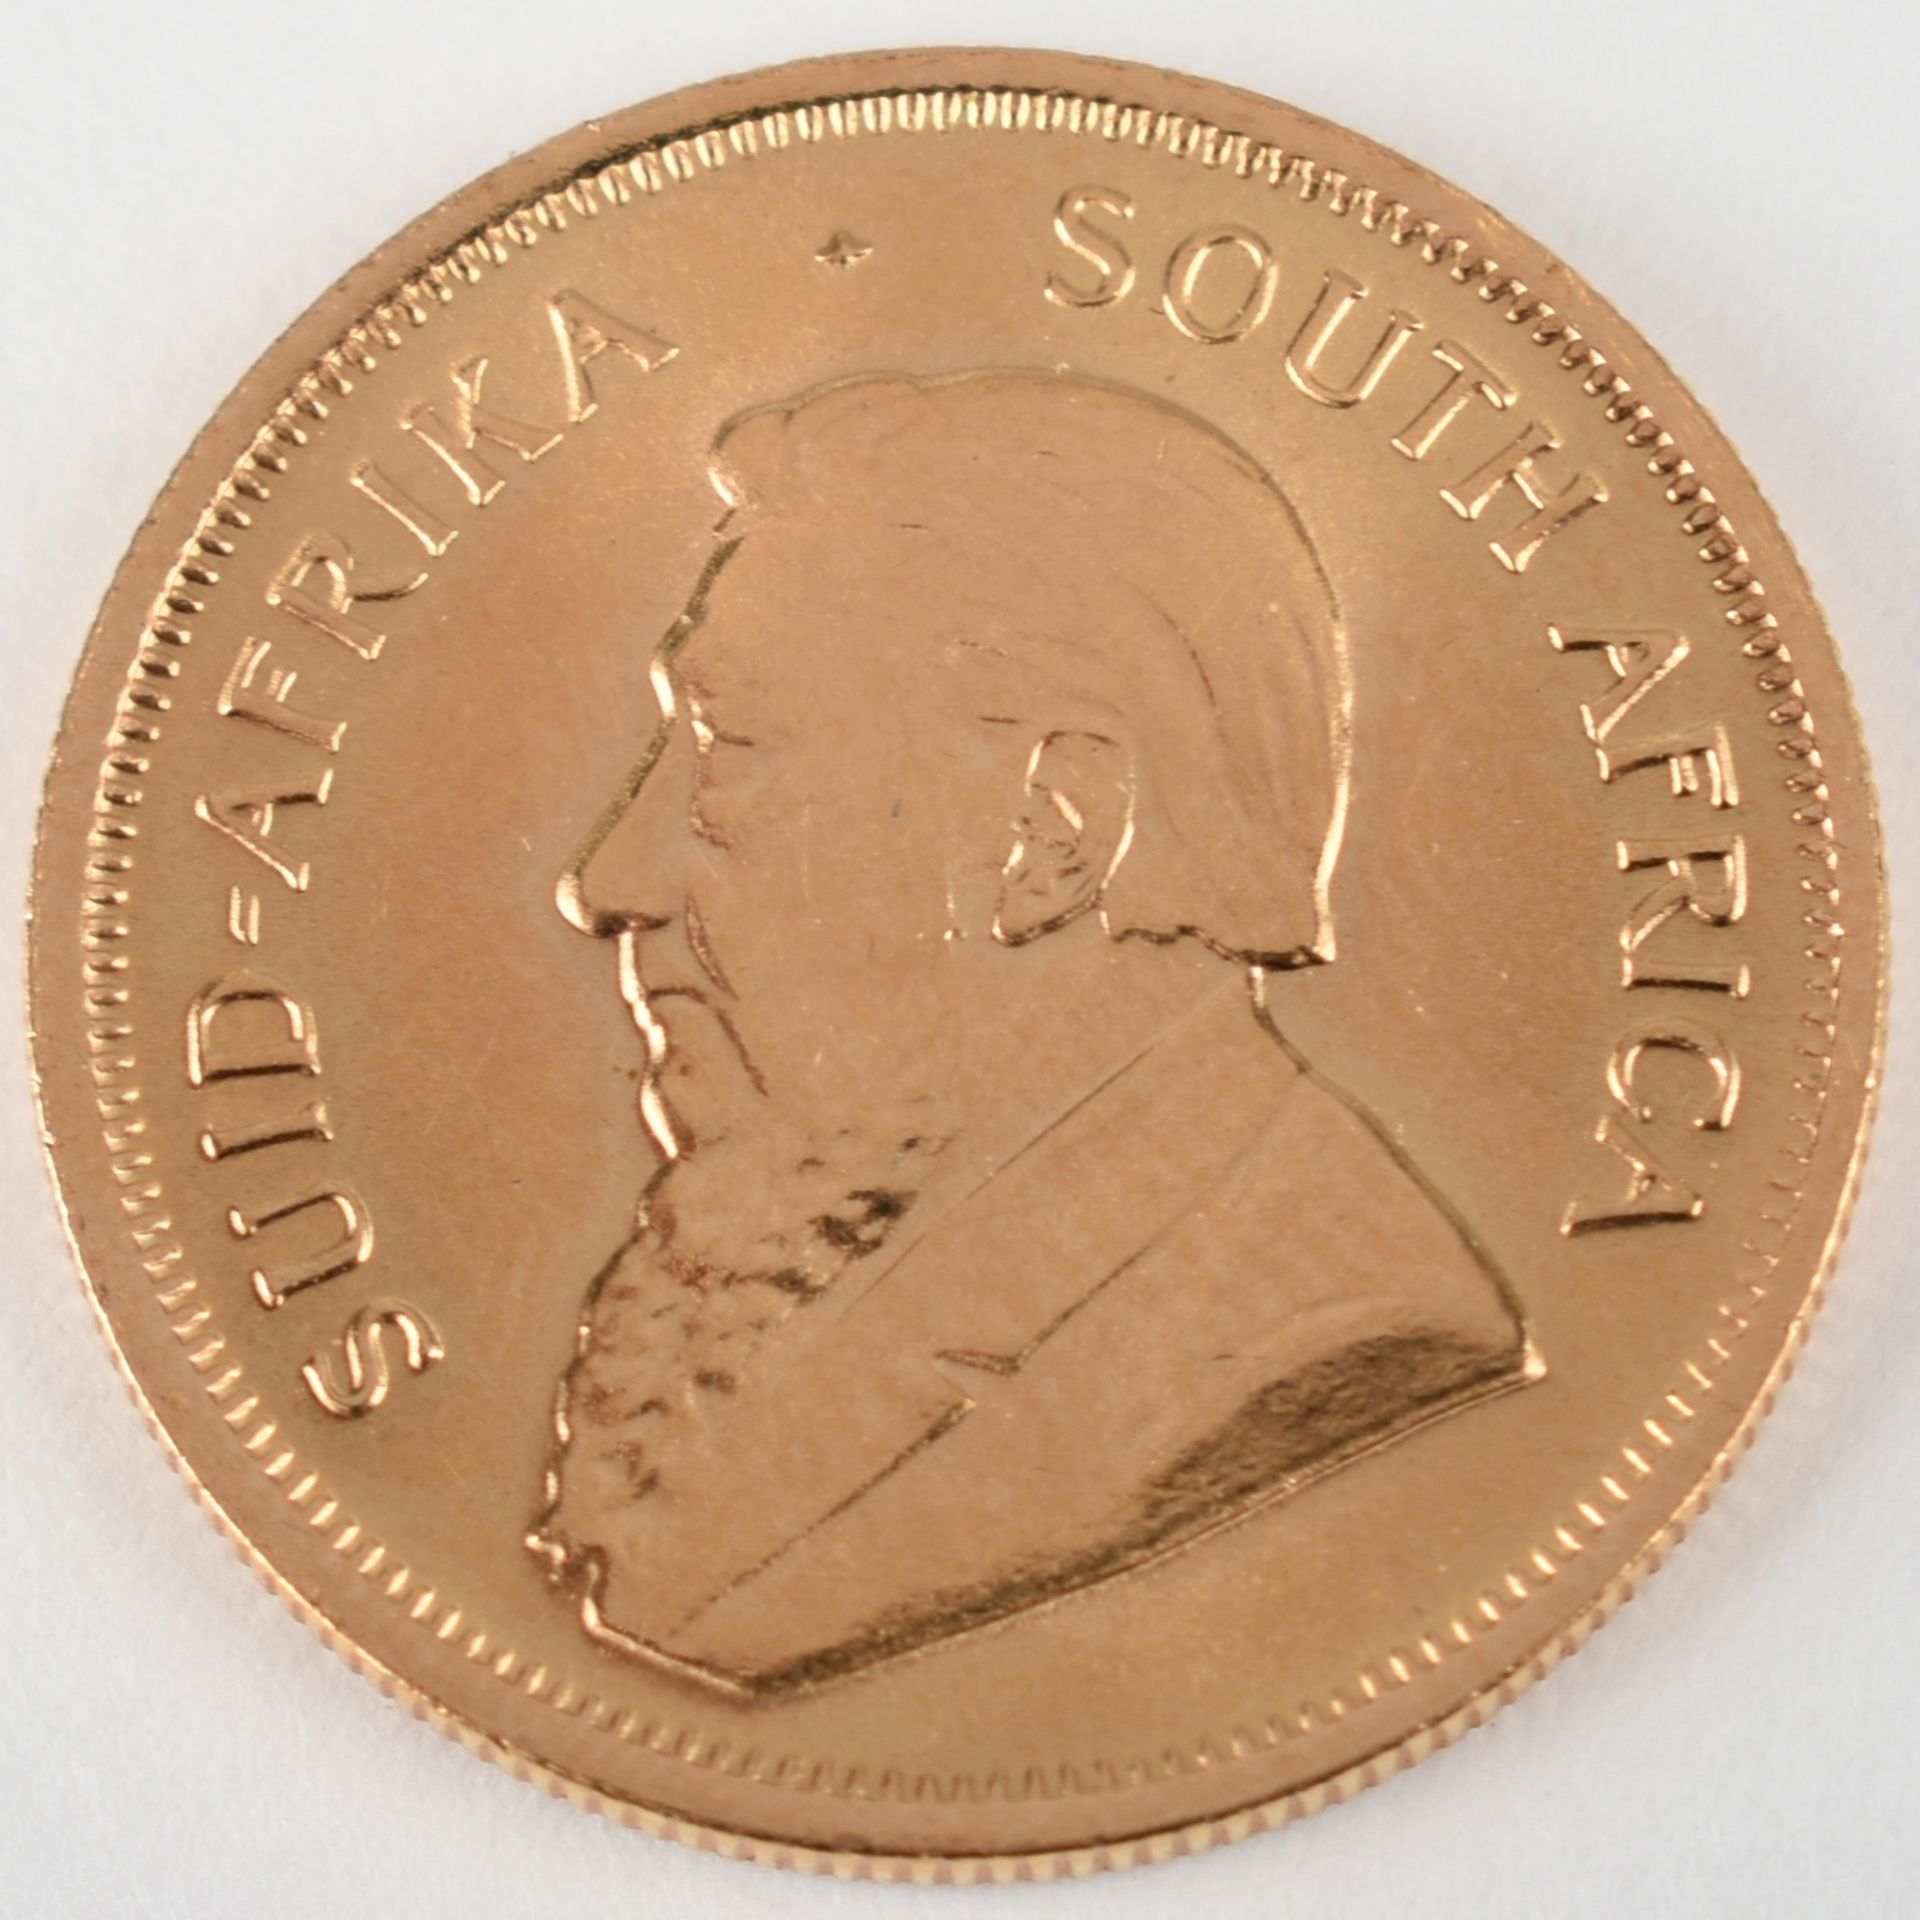 Goldmünze Südafrika 1982 Krügerrand, 1/4 oz in Gold, 916/1000, 8,482 g, D ca. 22 mm, av. Paul Kruger - Bild 3 aus 3